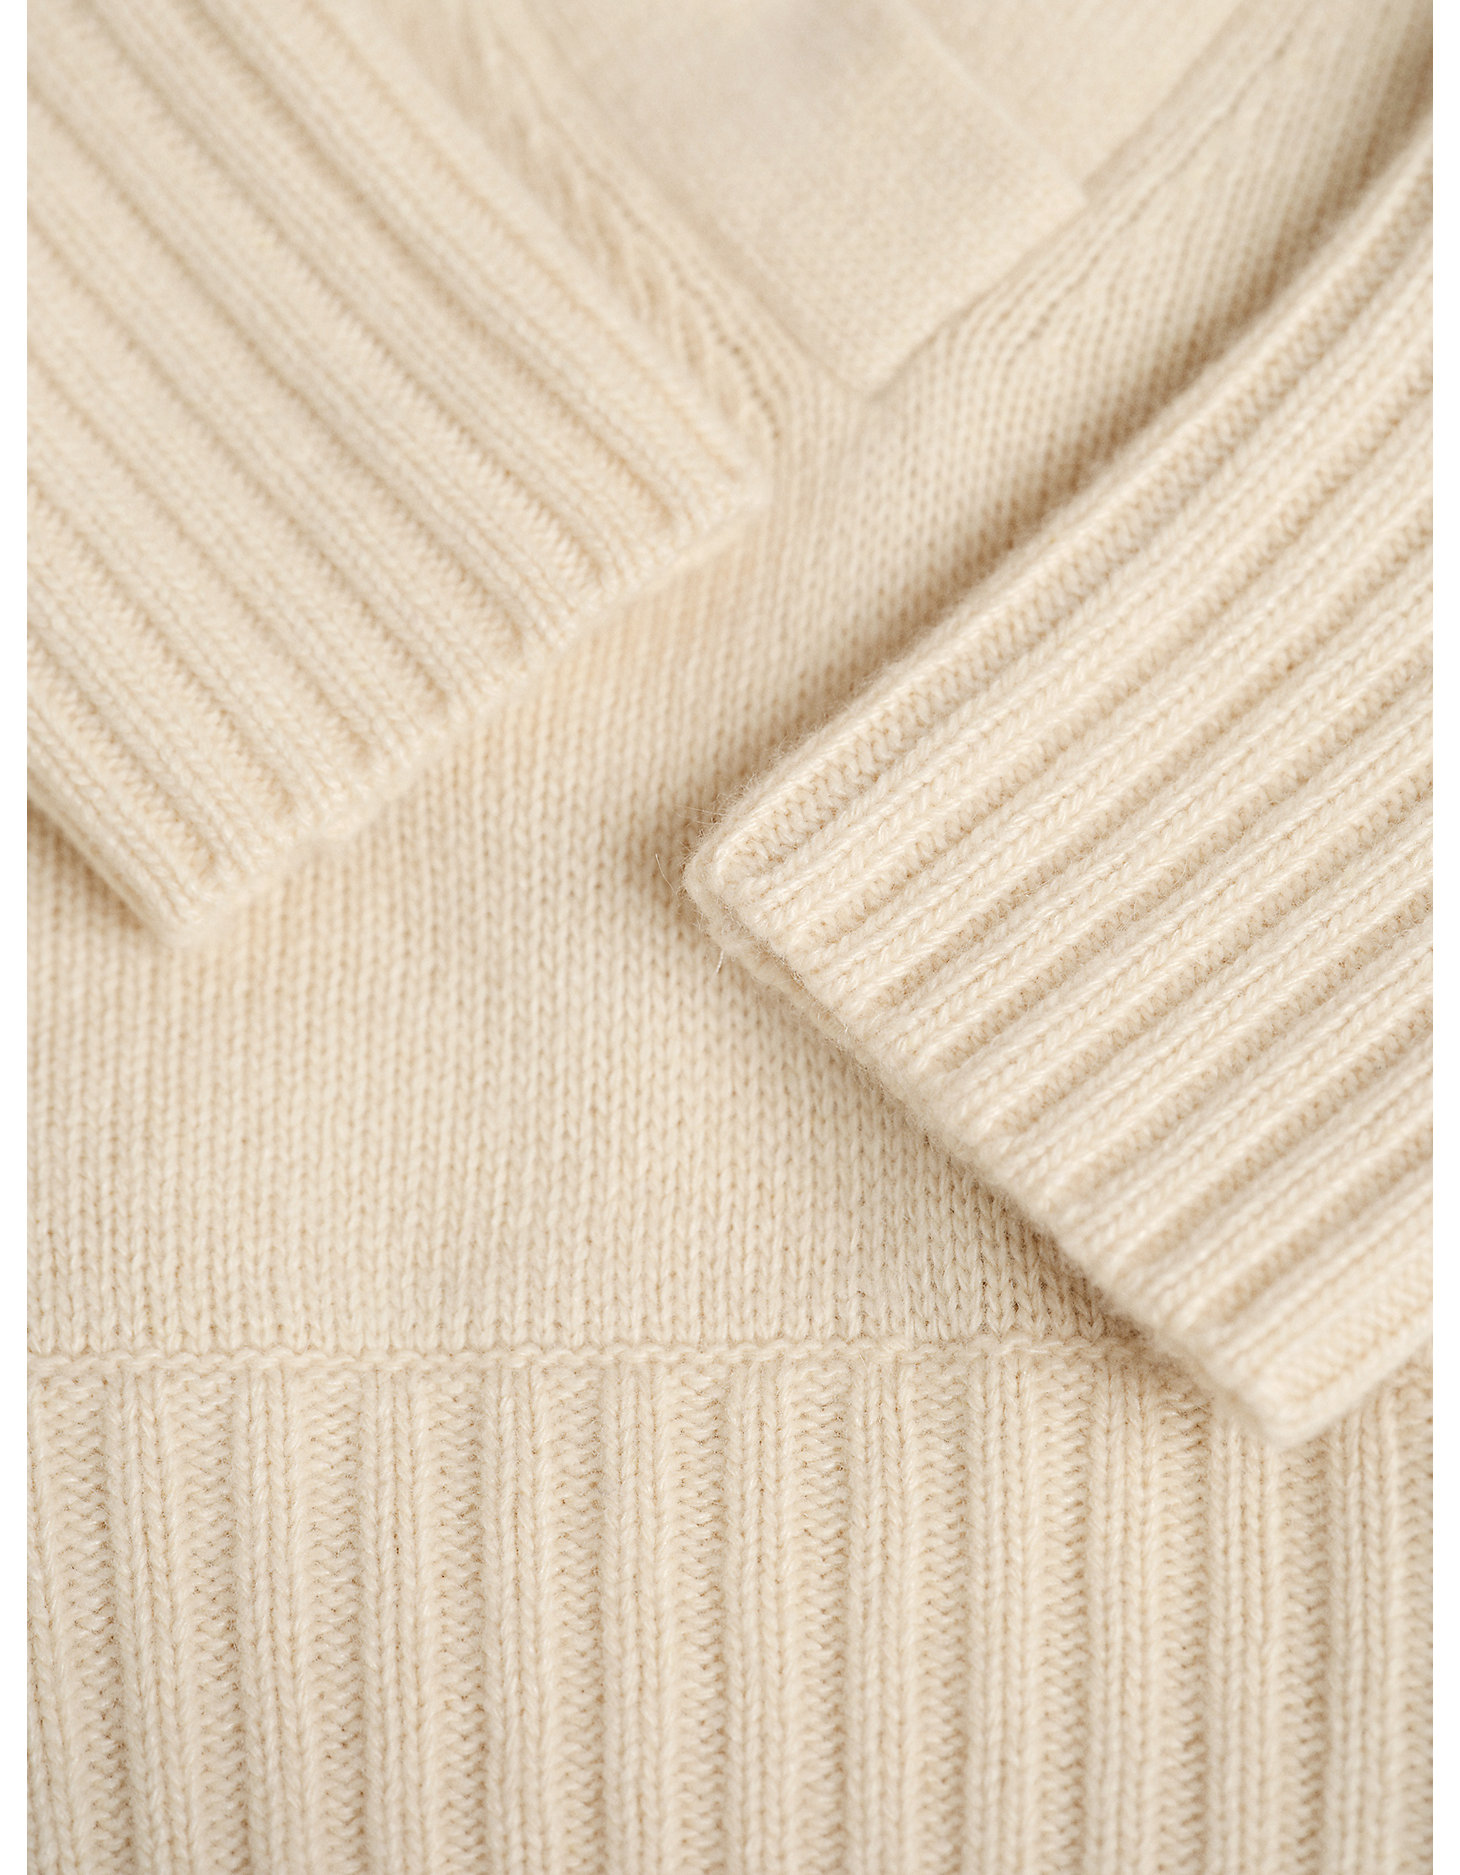 GANT x Wrangler Women's Cashmere Blend Sweater in Vintage Cream alternative view 6